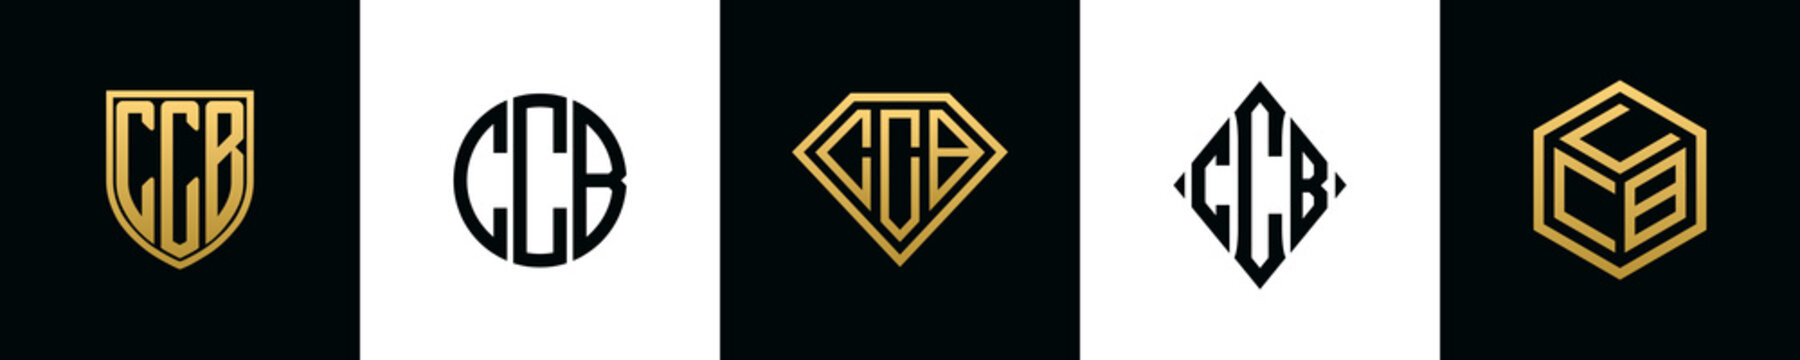 Initial letters CCB logo designs Bundle